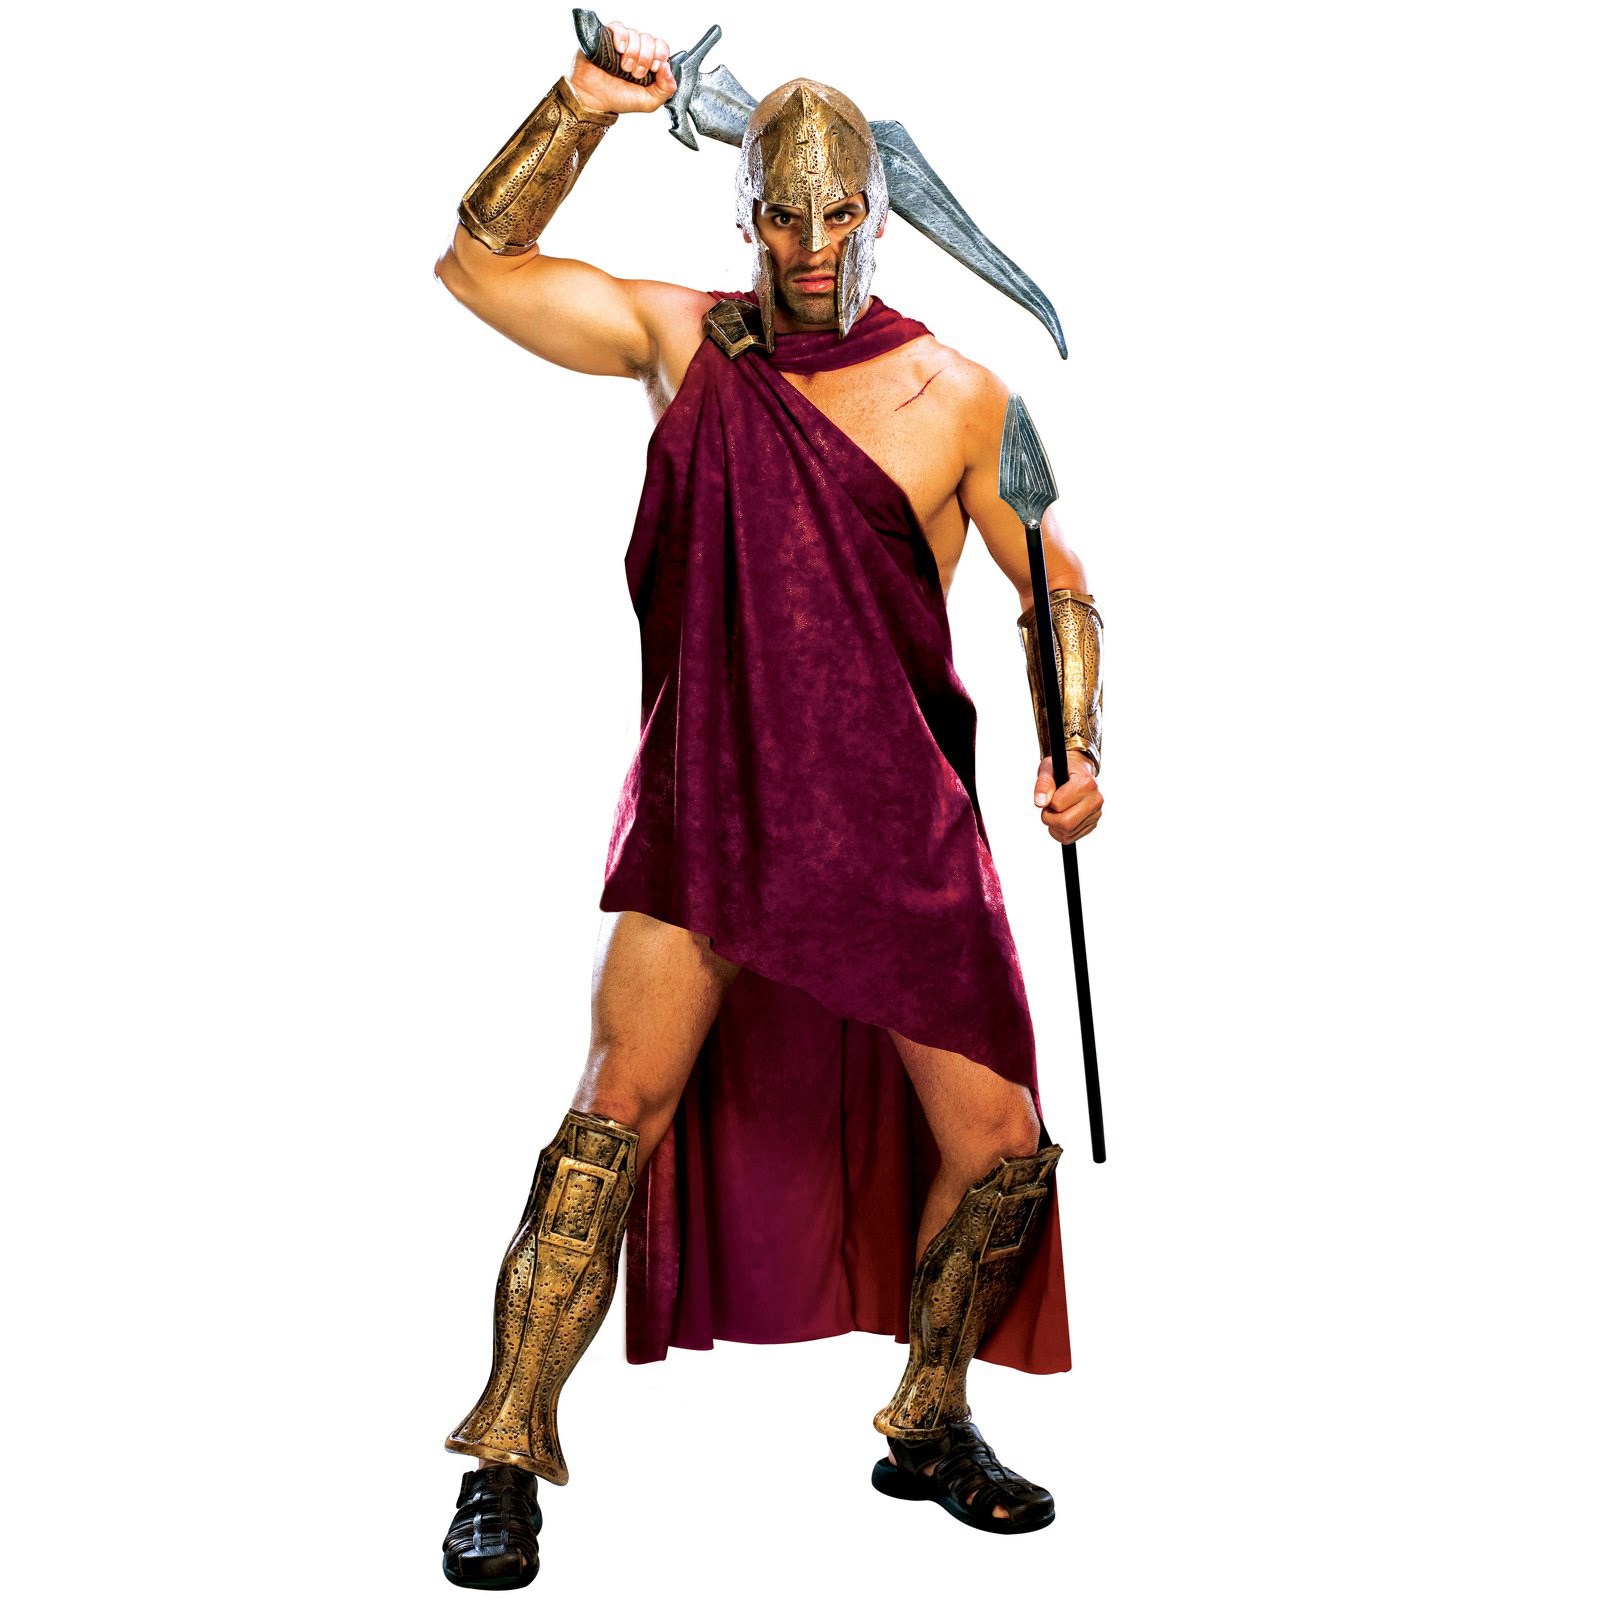 300 - Spartan Deluxe Adult Costume